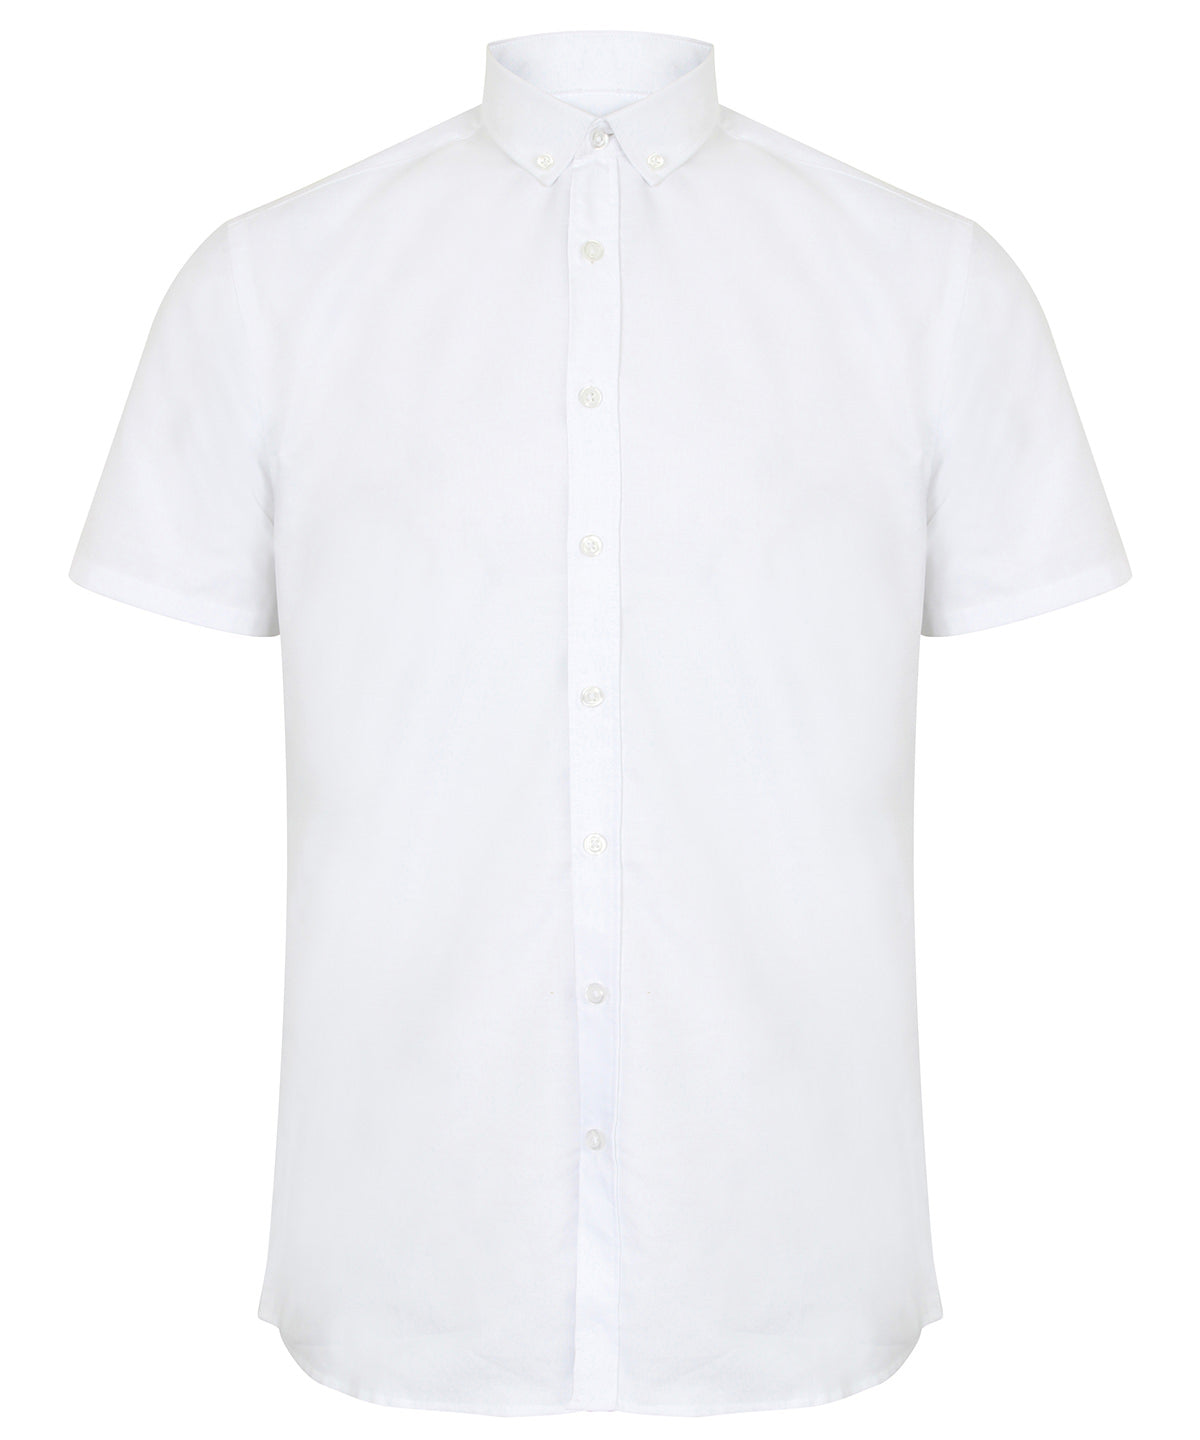 Bolir - Modern Short Sleeve Oxford Shirt